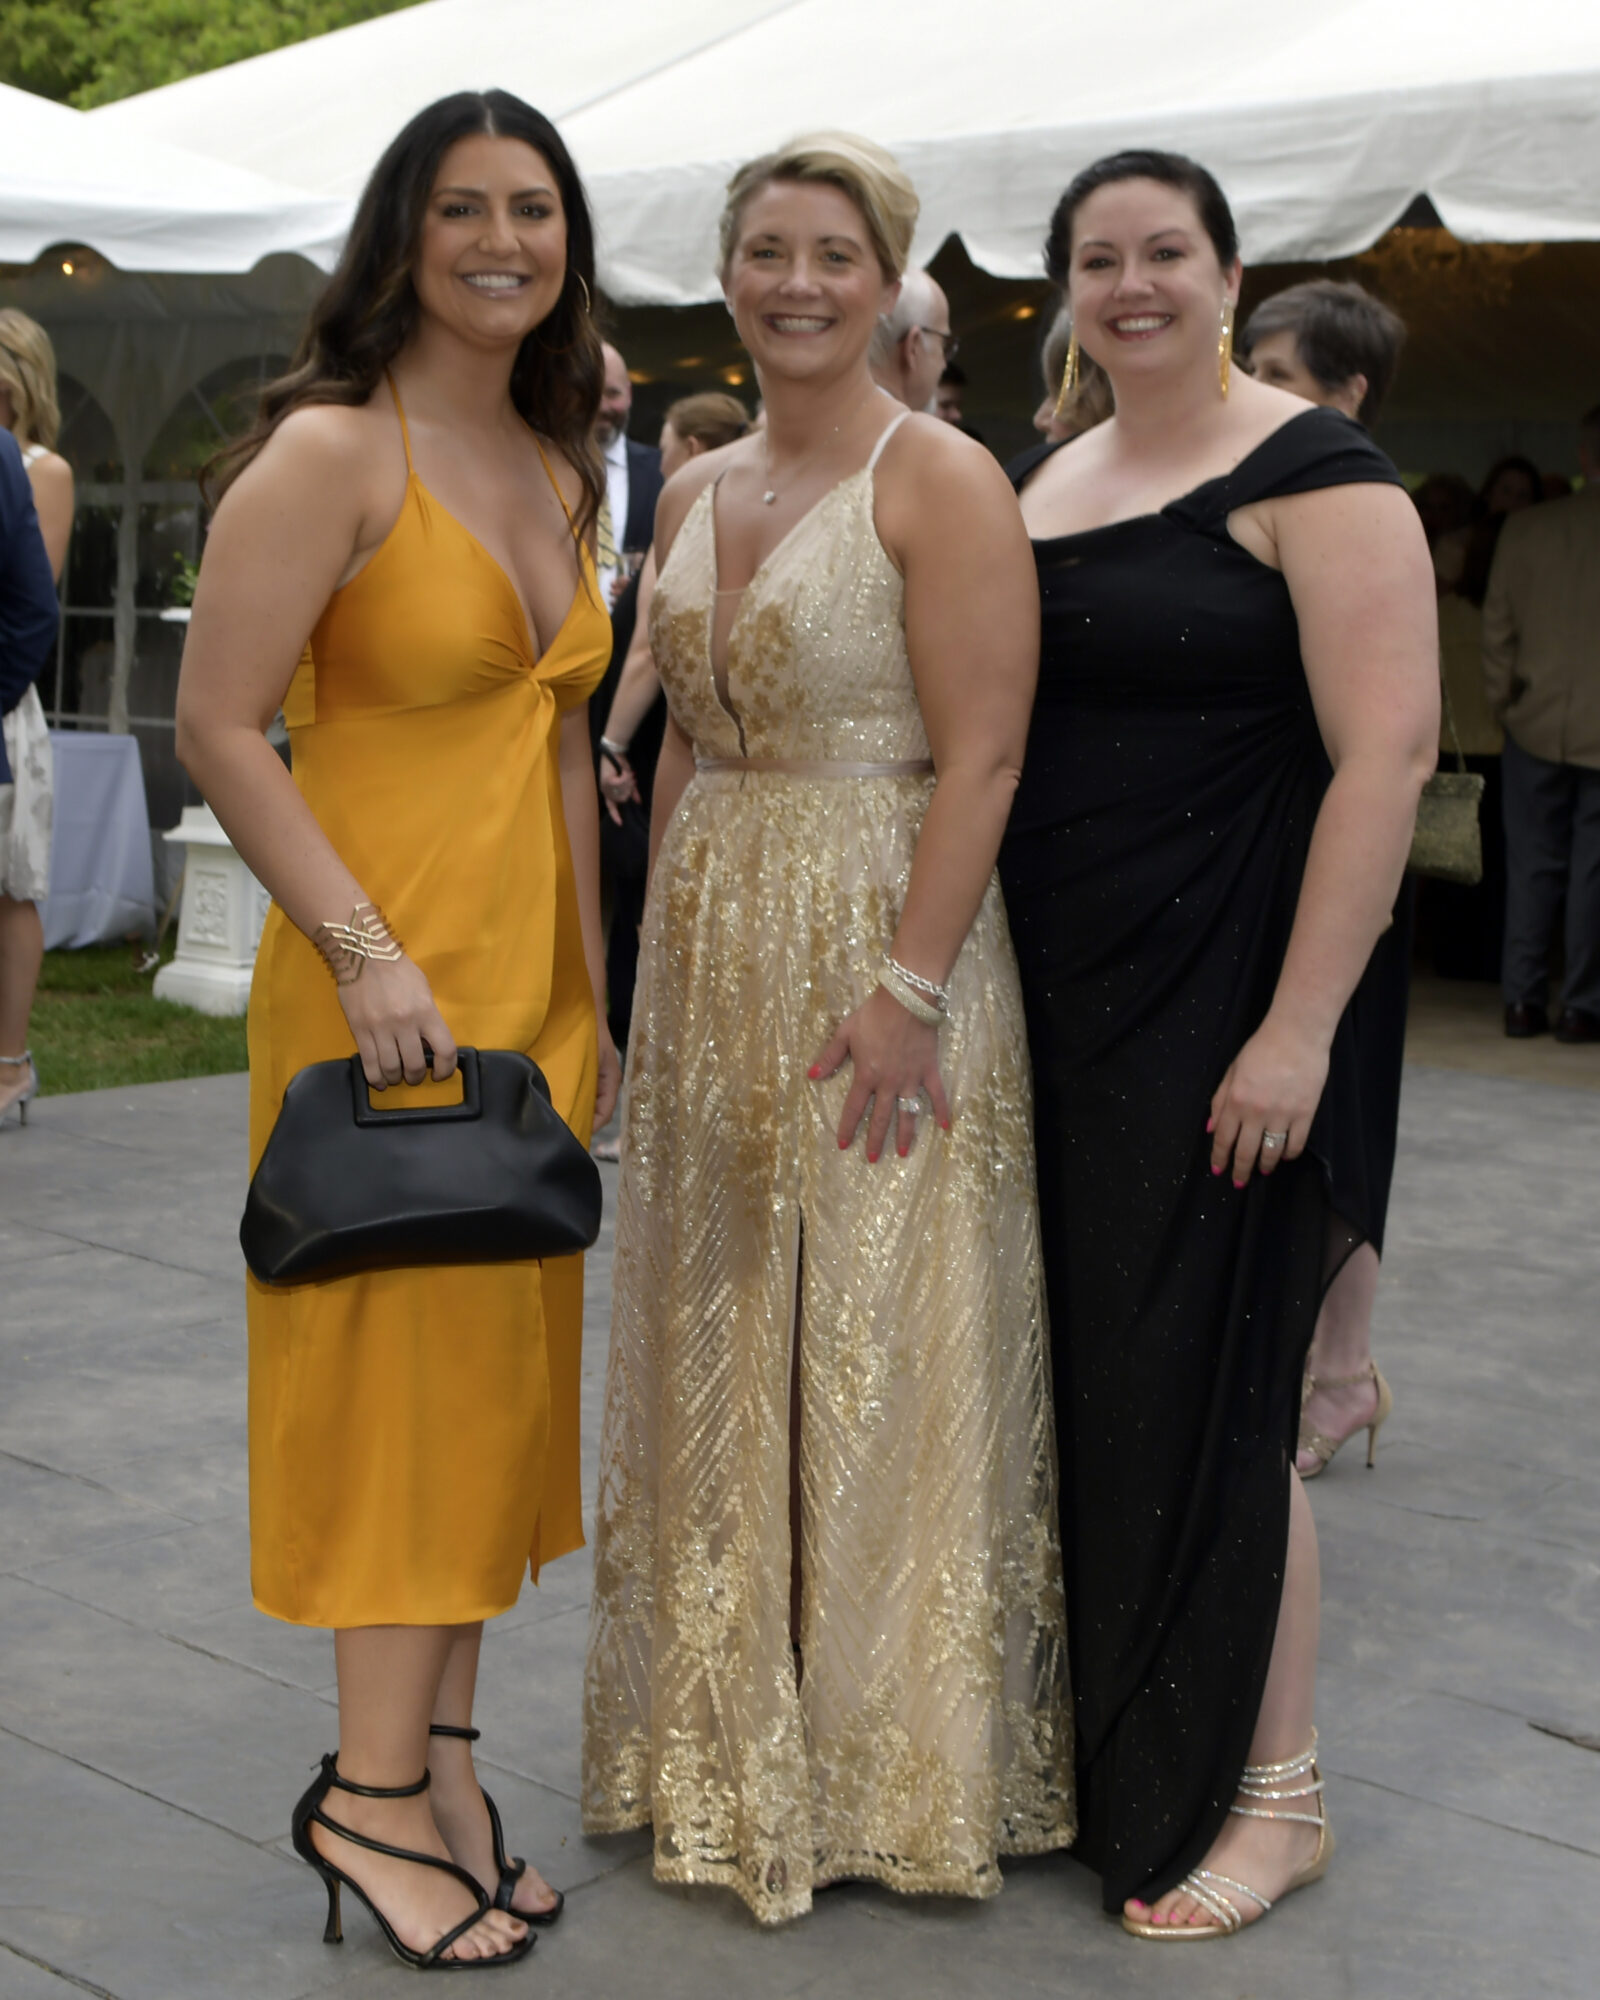 3 women iin dresses pose for photo